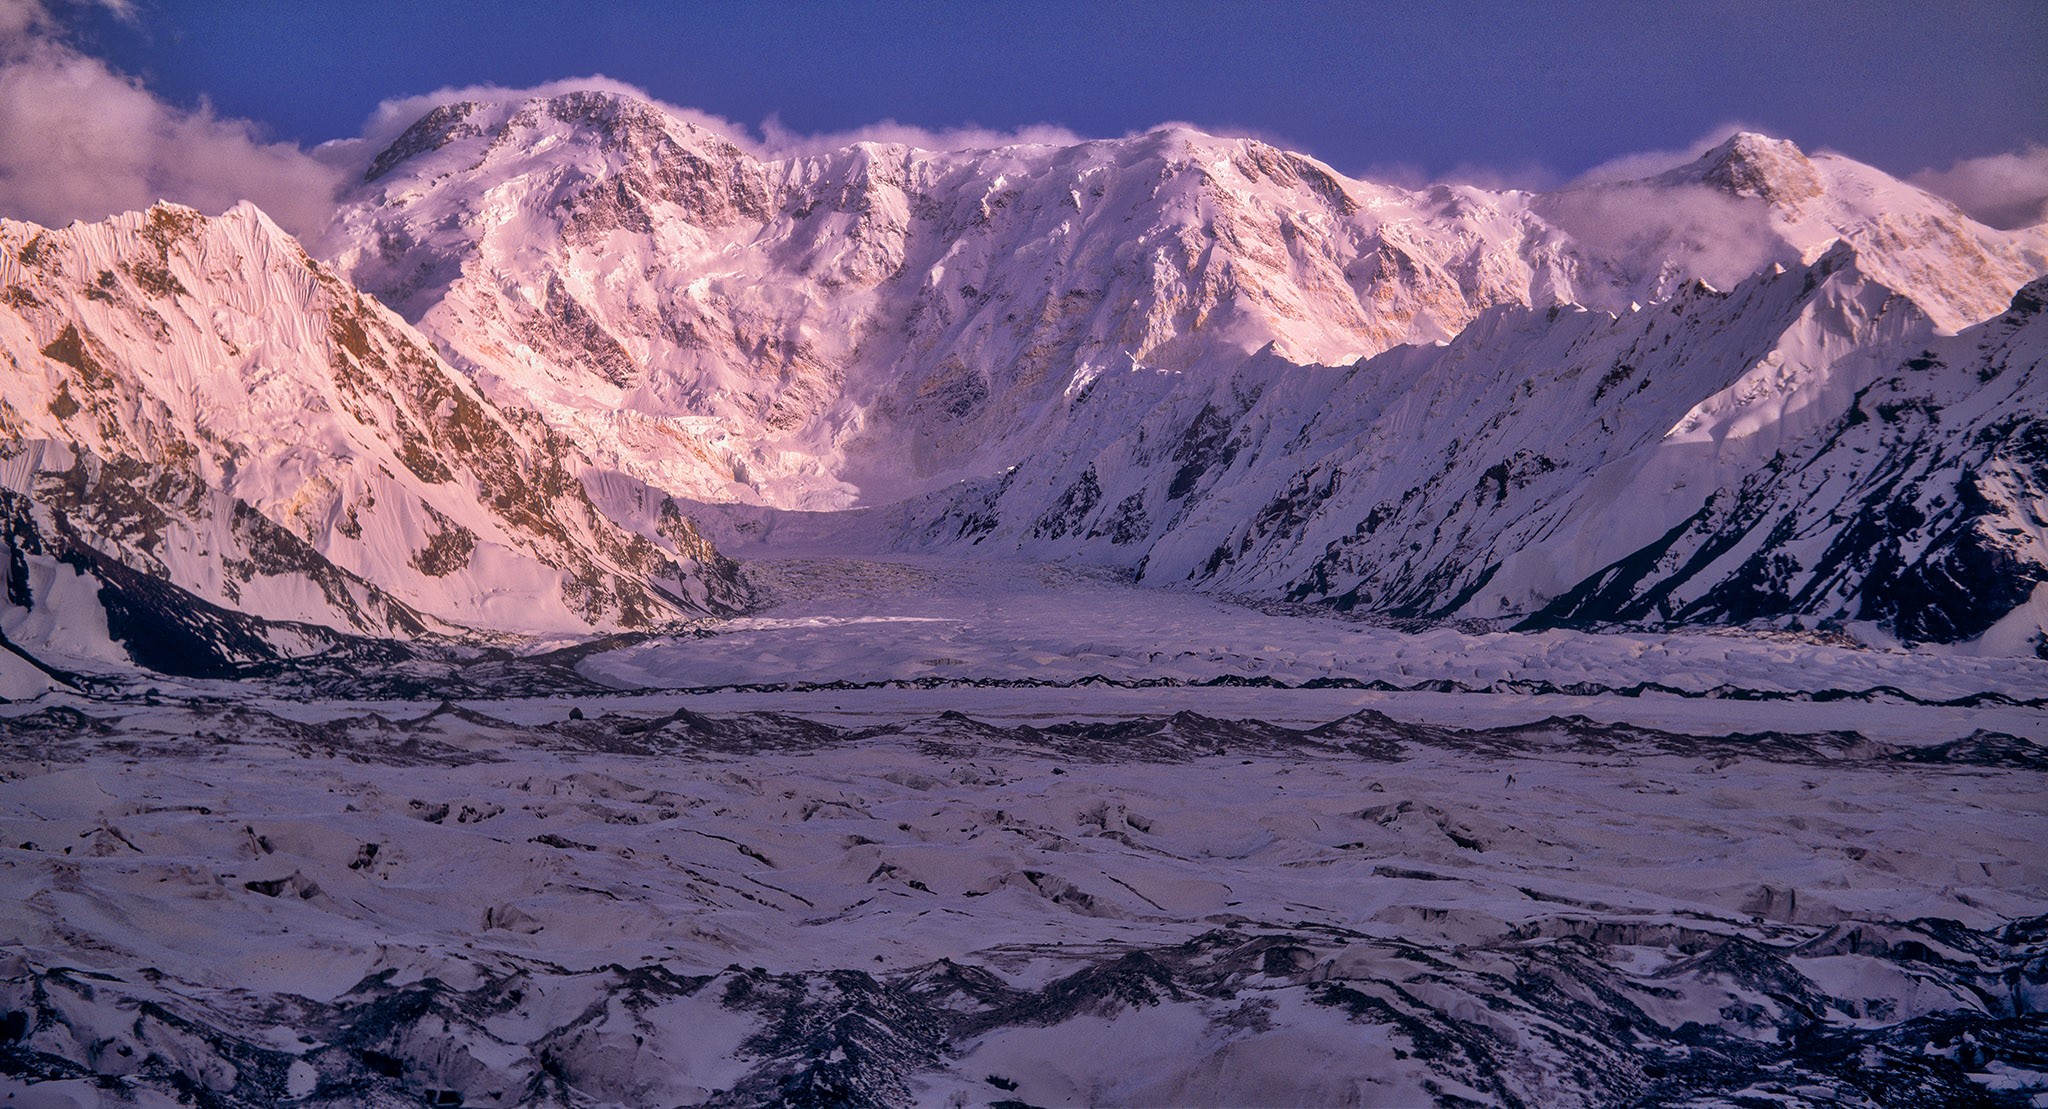 Spectacular mountain scenery in Asia as captured by ESLT Board of Directors, Rick Kattelmann